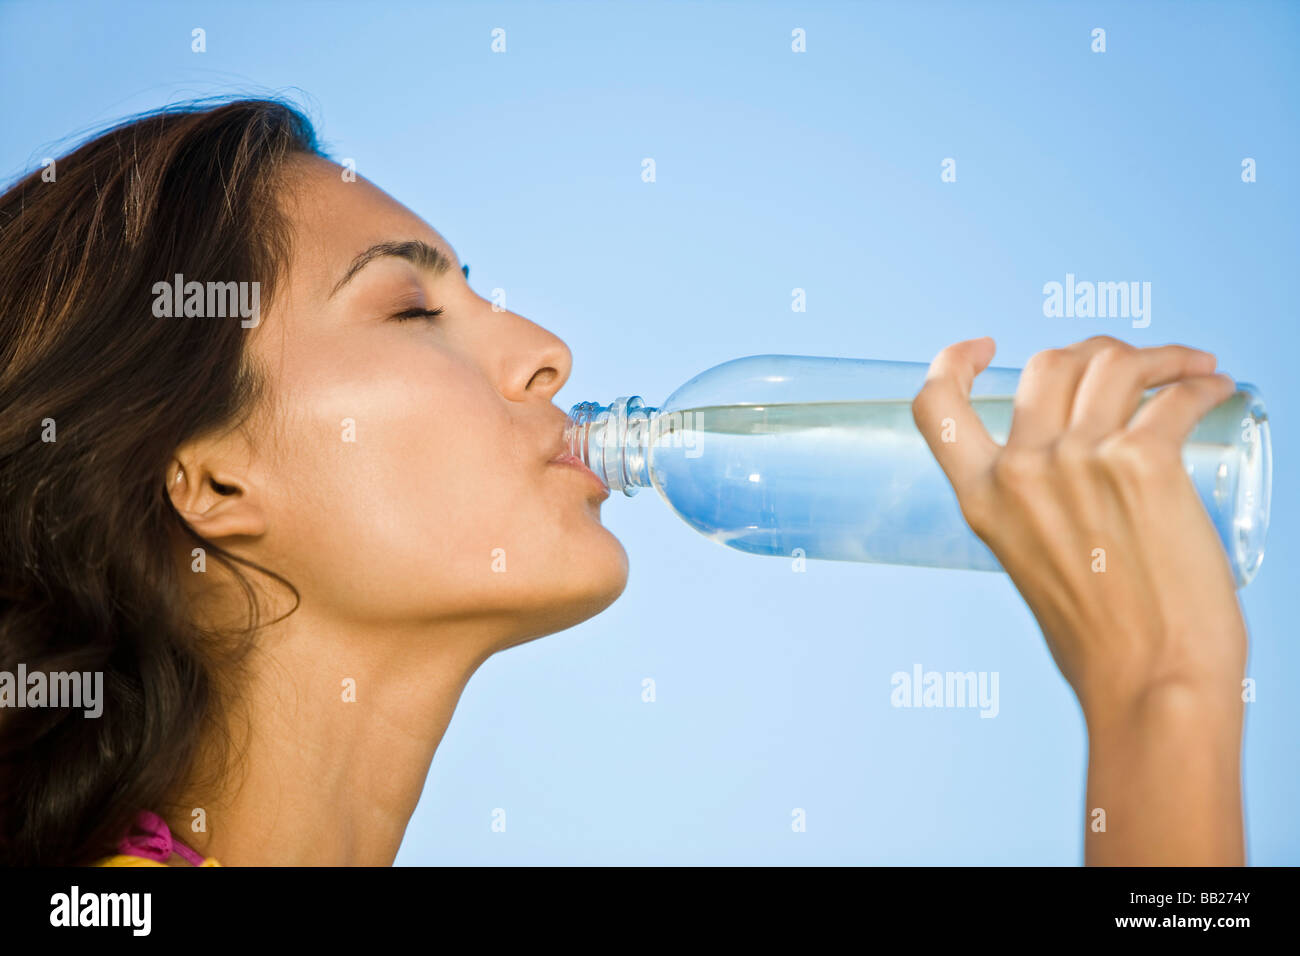 Питьевая вода сотрудников. Вода в медицине. Питьевая вода типа восс. Drinking Water from a Water Bottle. Девушка вода бутылка здоровье.